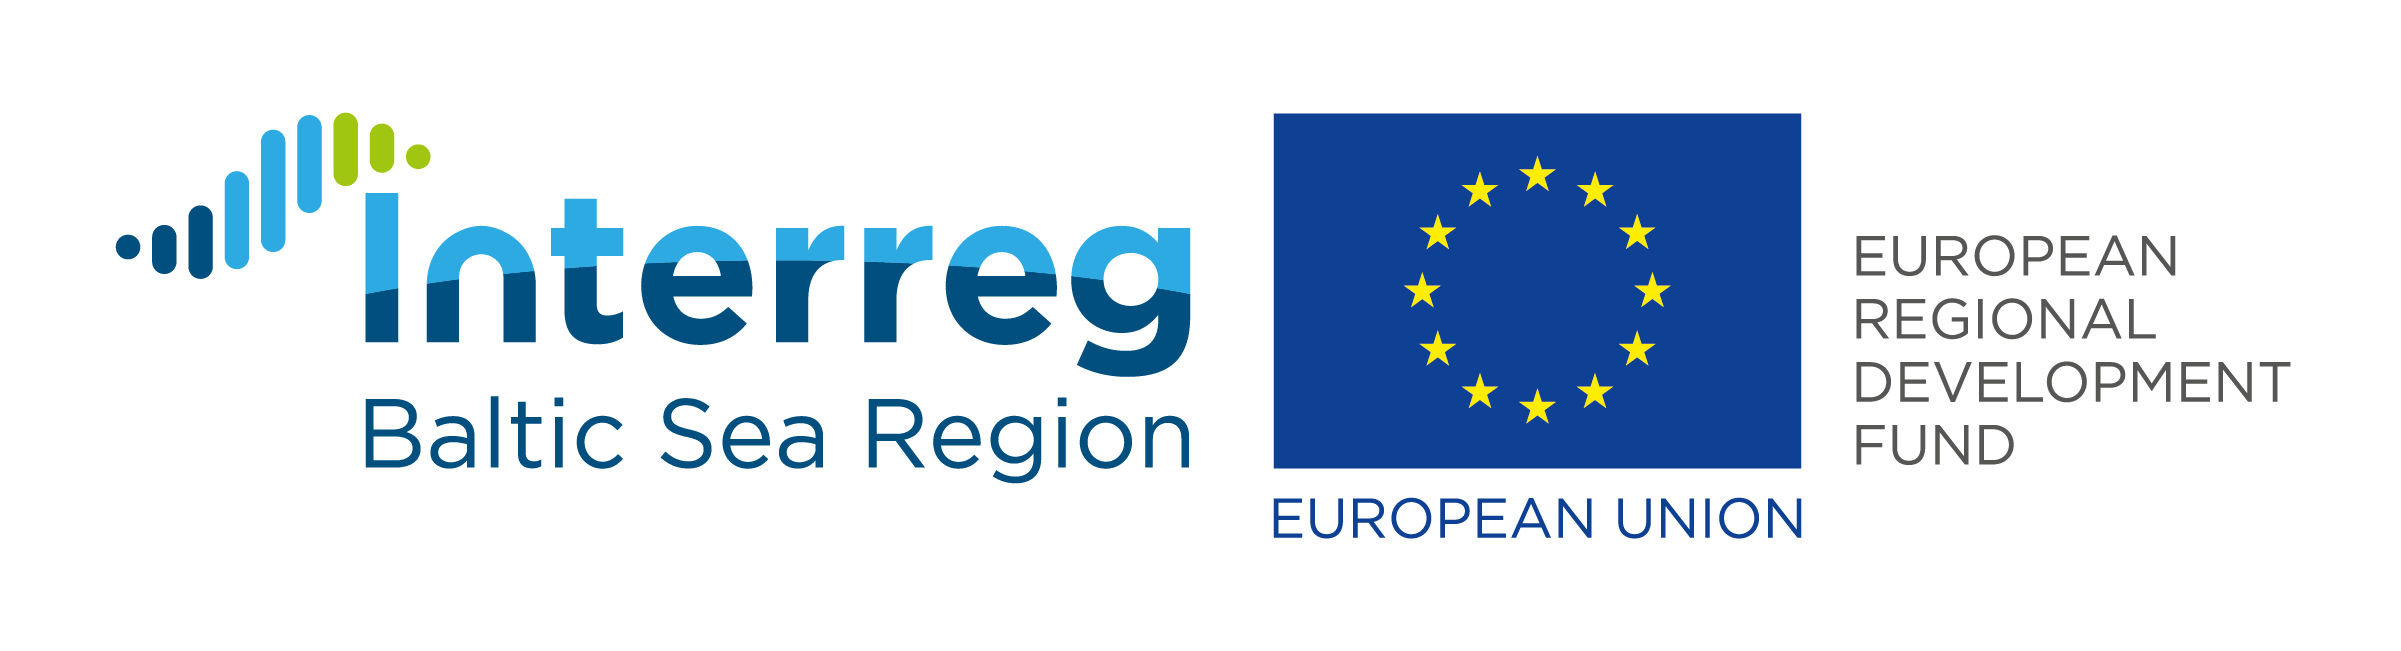 Project funding: Interreg, European Union